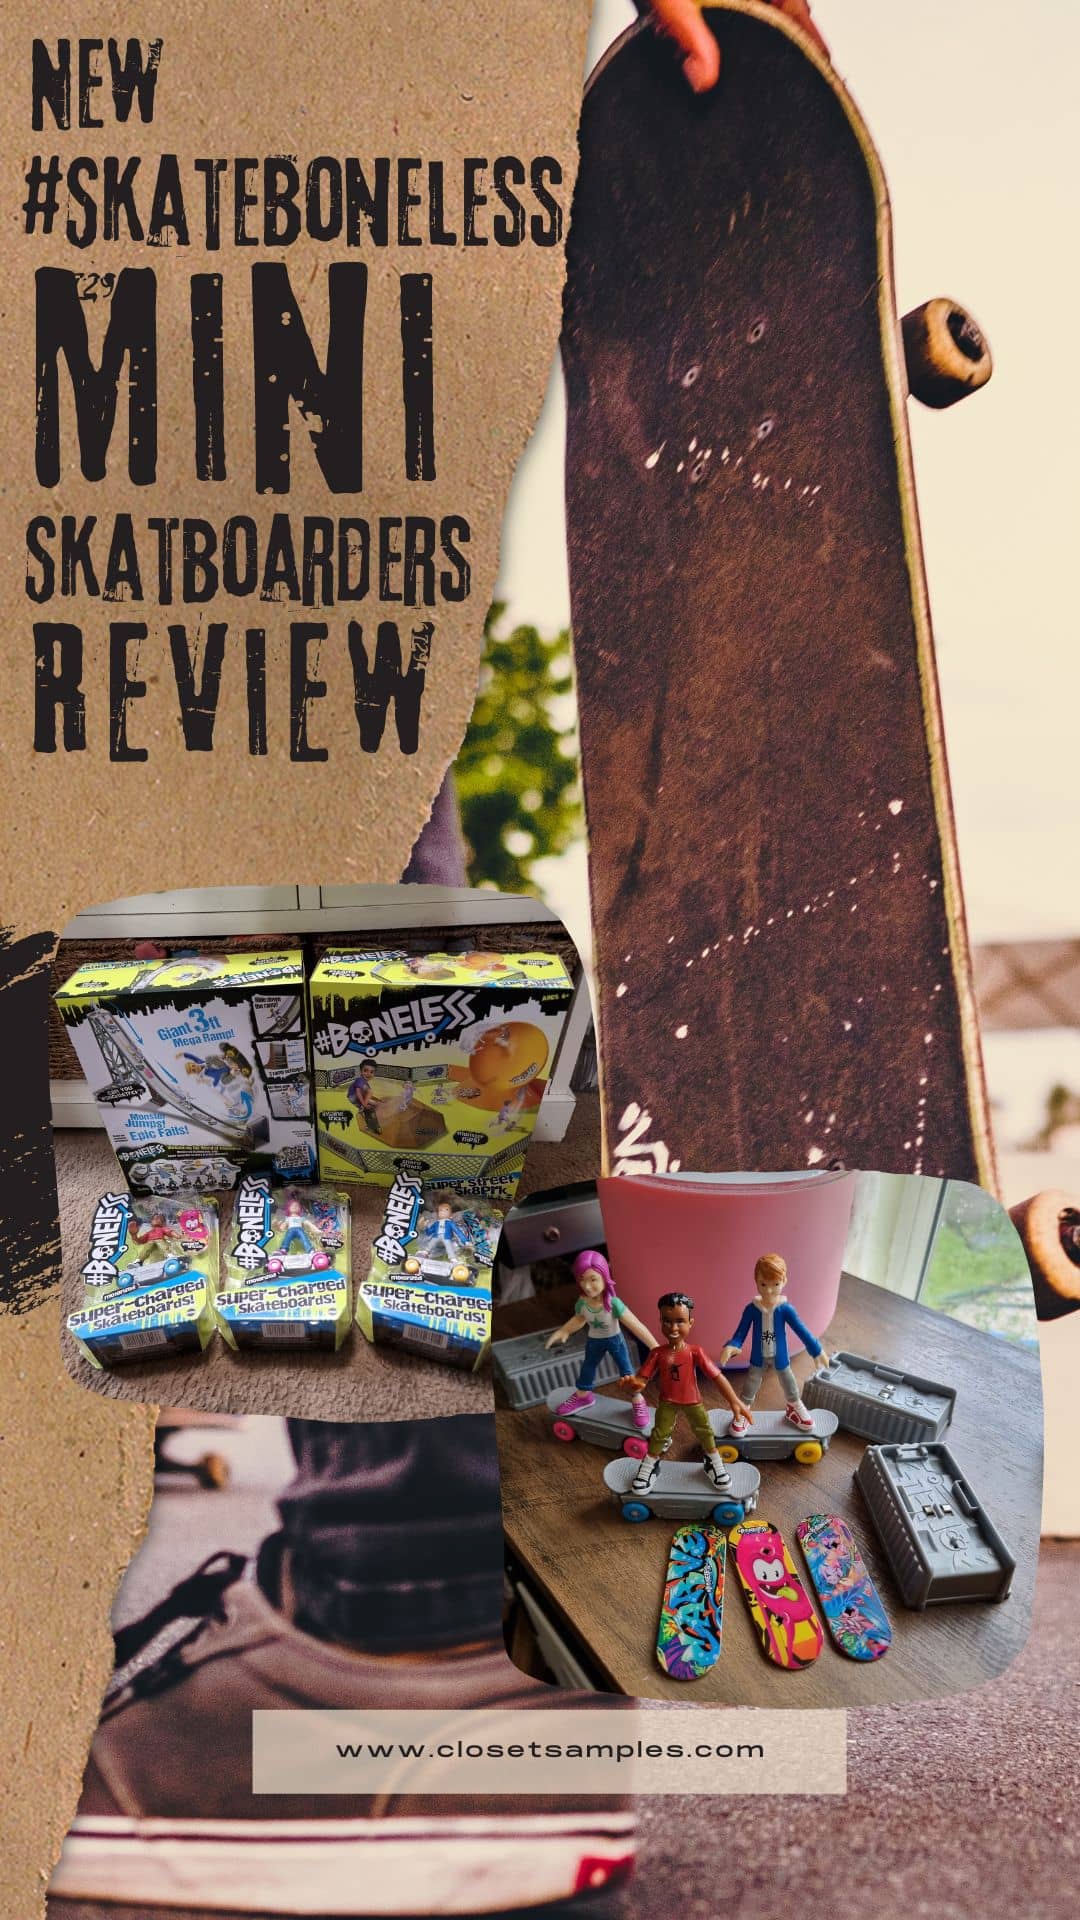 New SkateBoneless mini skateboarders Review closetsamples pinterest